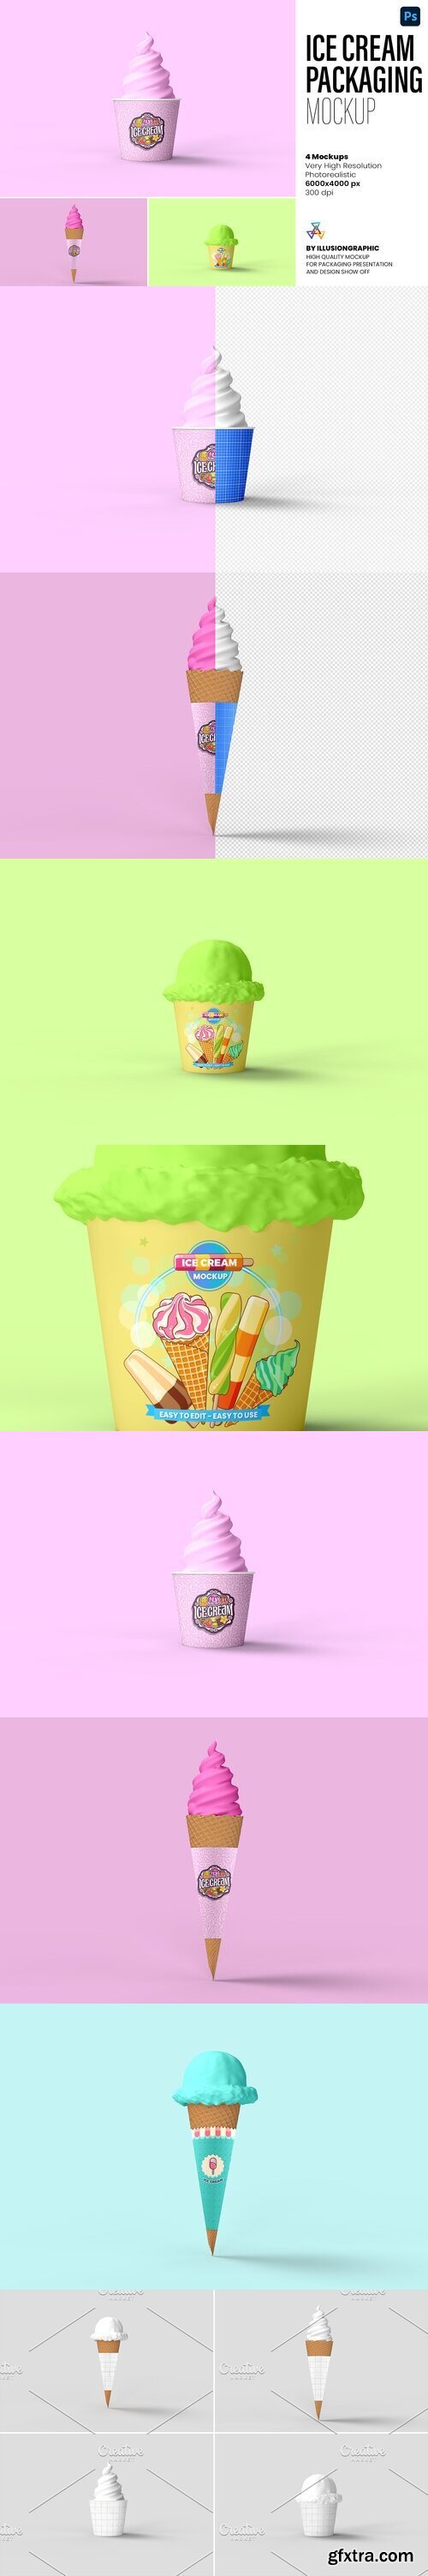 CreativeMarket - Ice Cream Packaging Mockup - 4 views 7373716